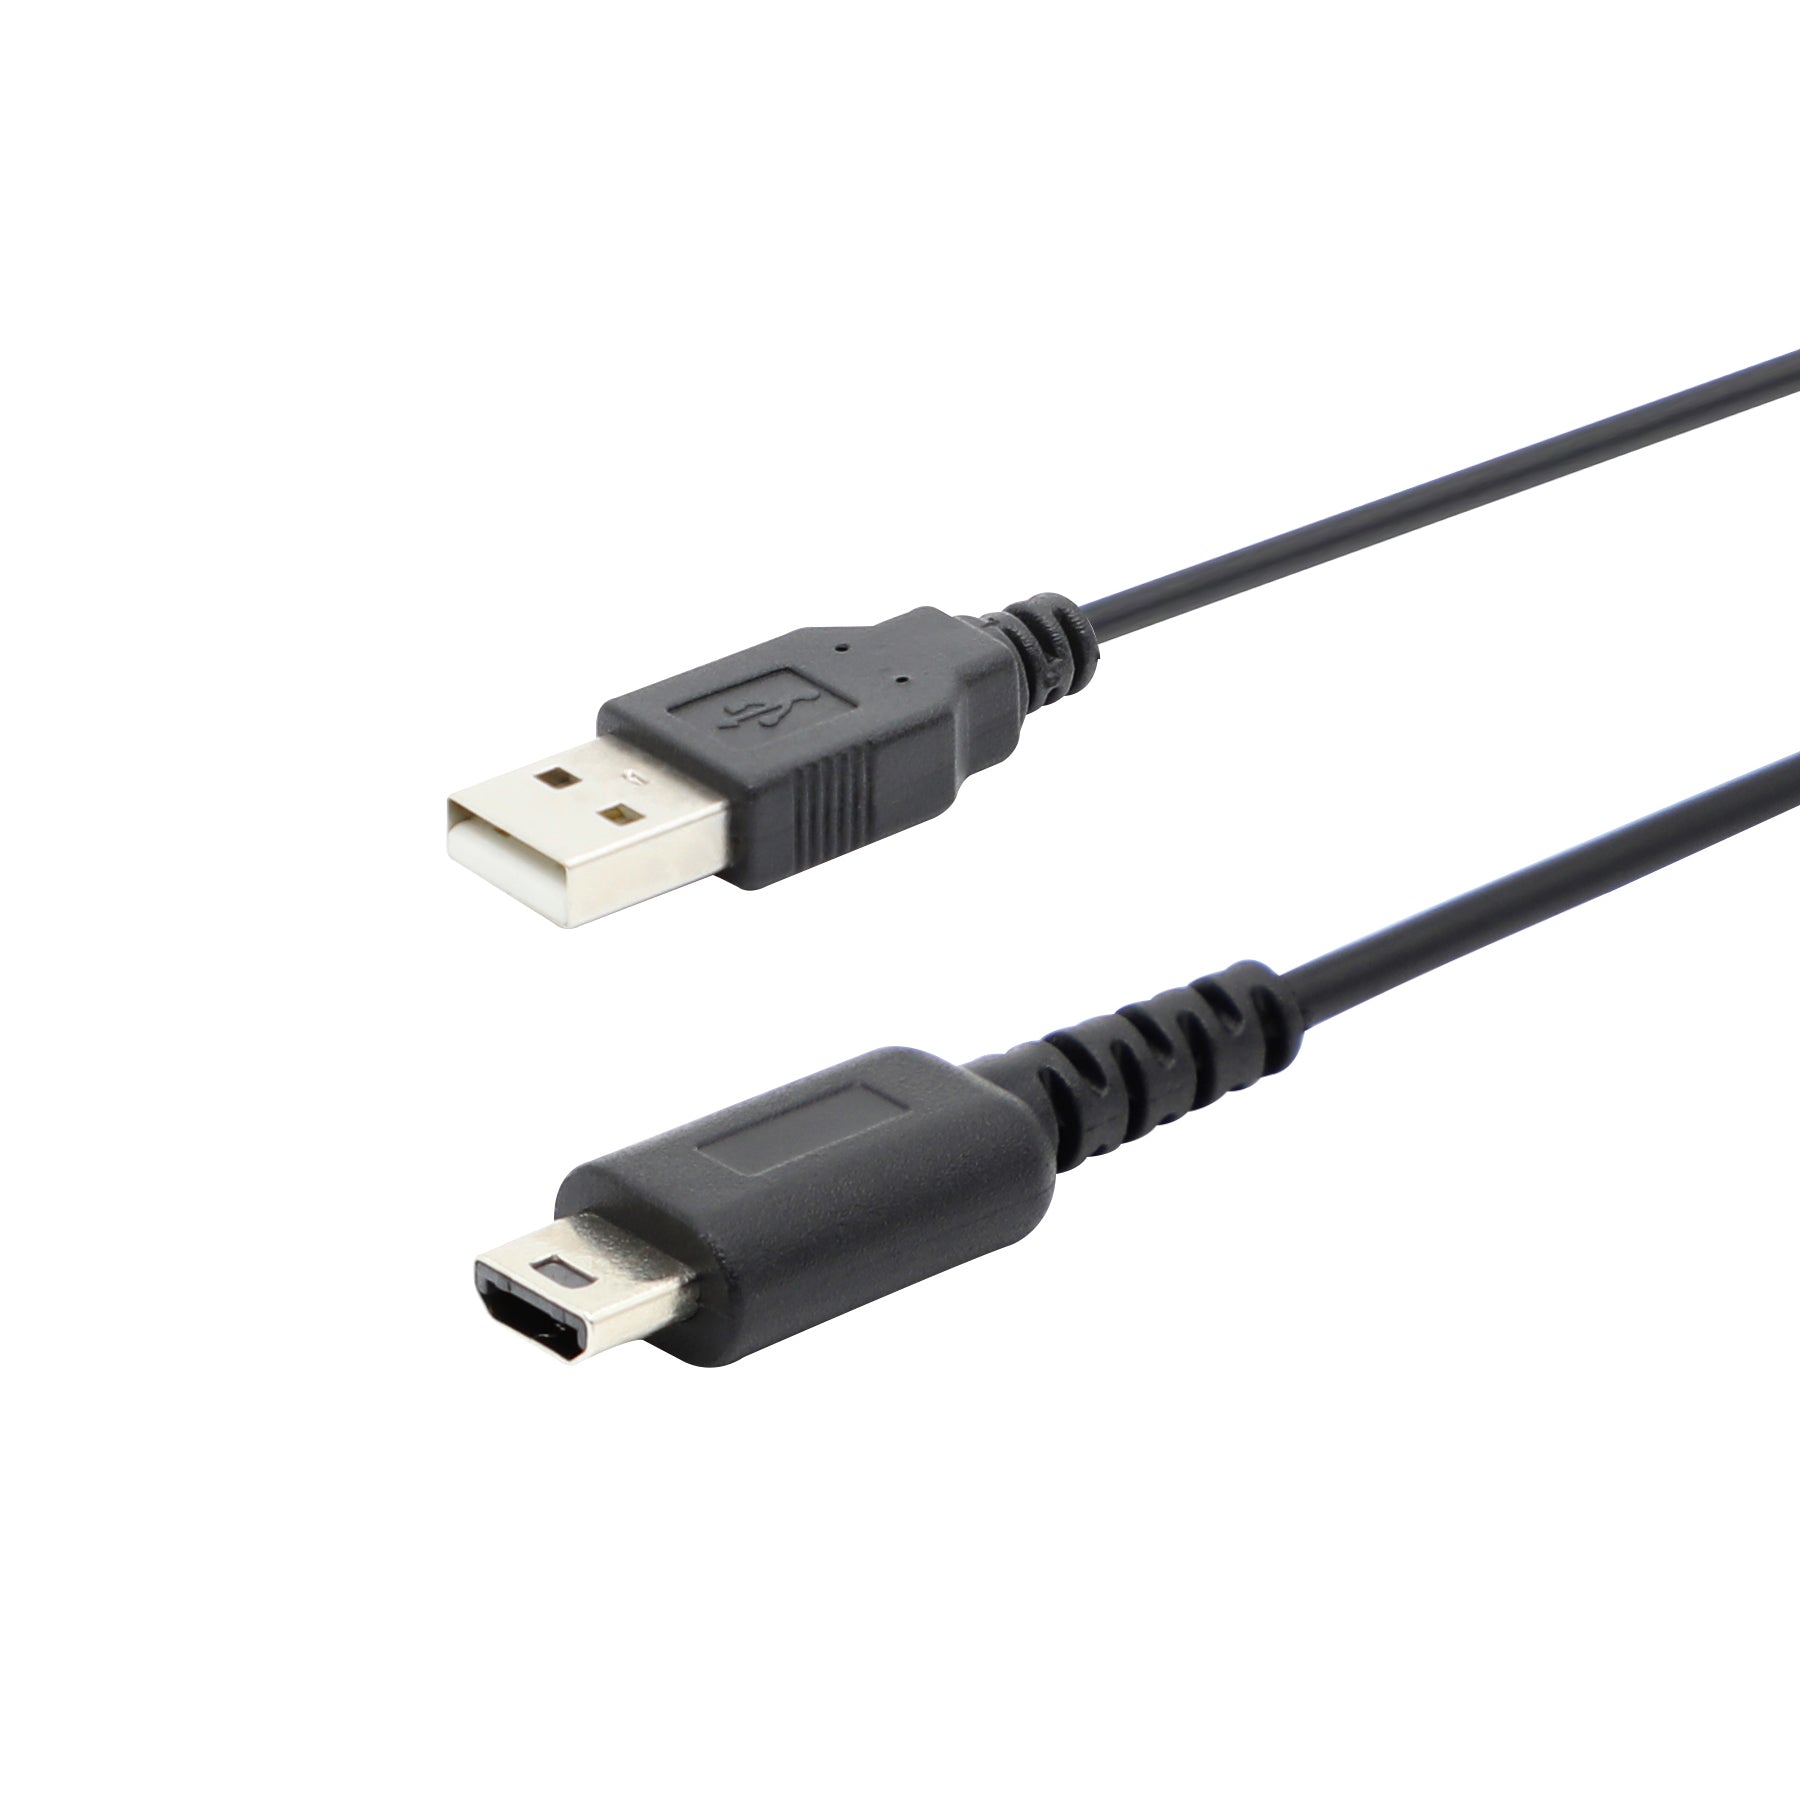 HAUZIK Lite Charger Cable, USB Cord Compatible Nintendo